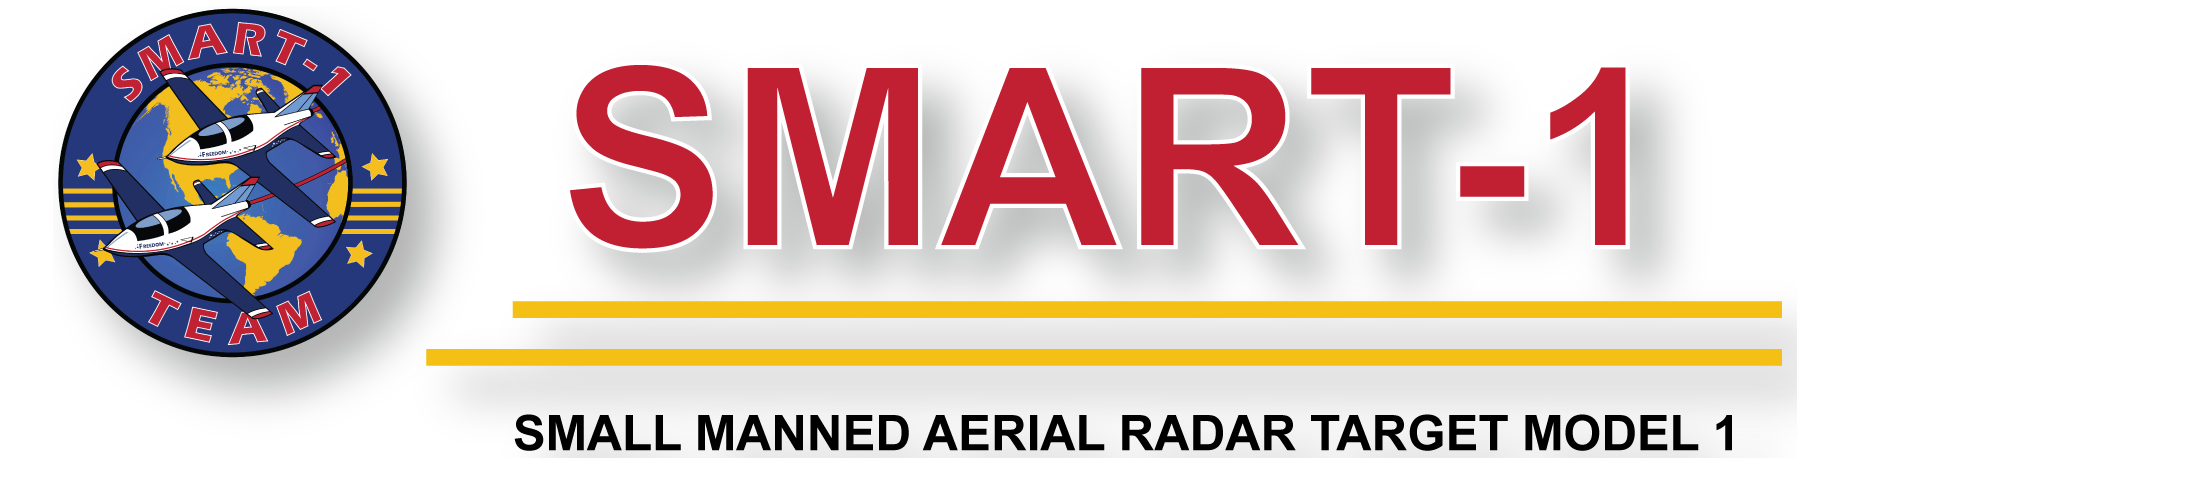 Smart-1 logo